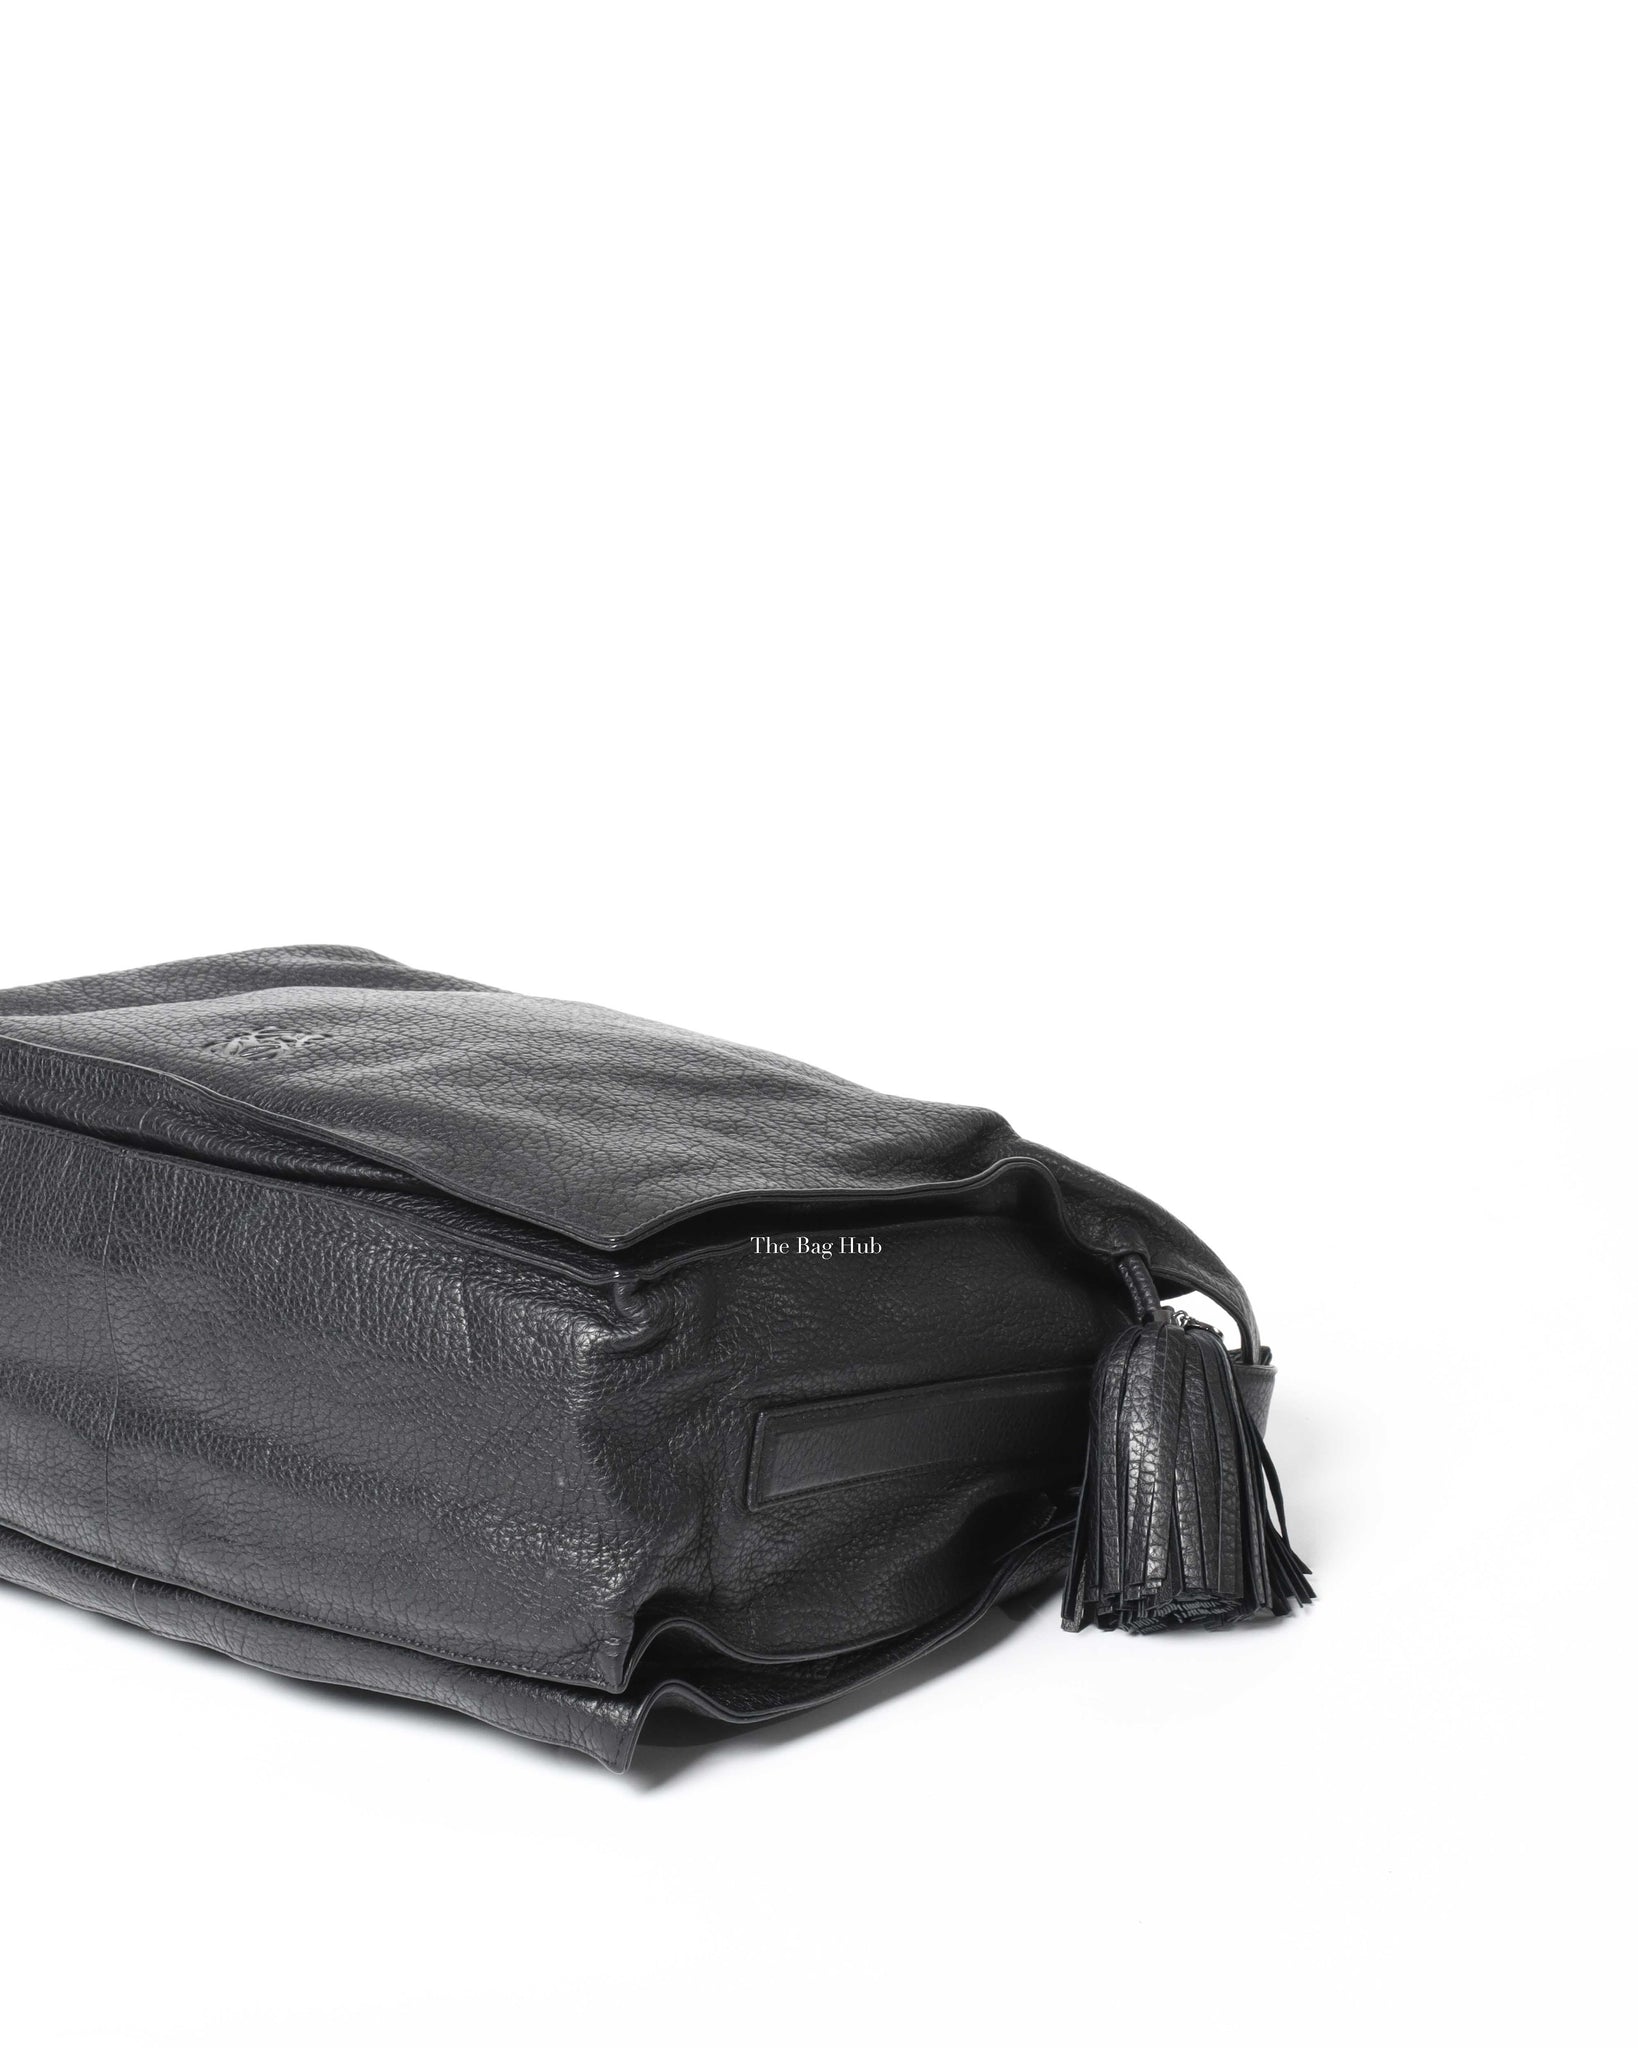 Loewe Black Grained Leather Flamenco Tassel Bag OS-10